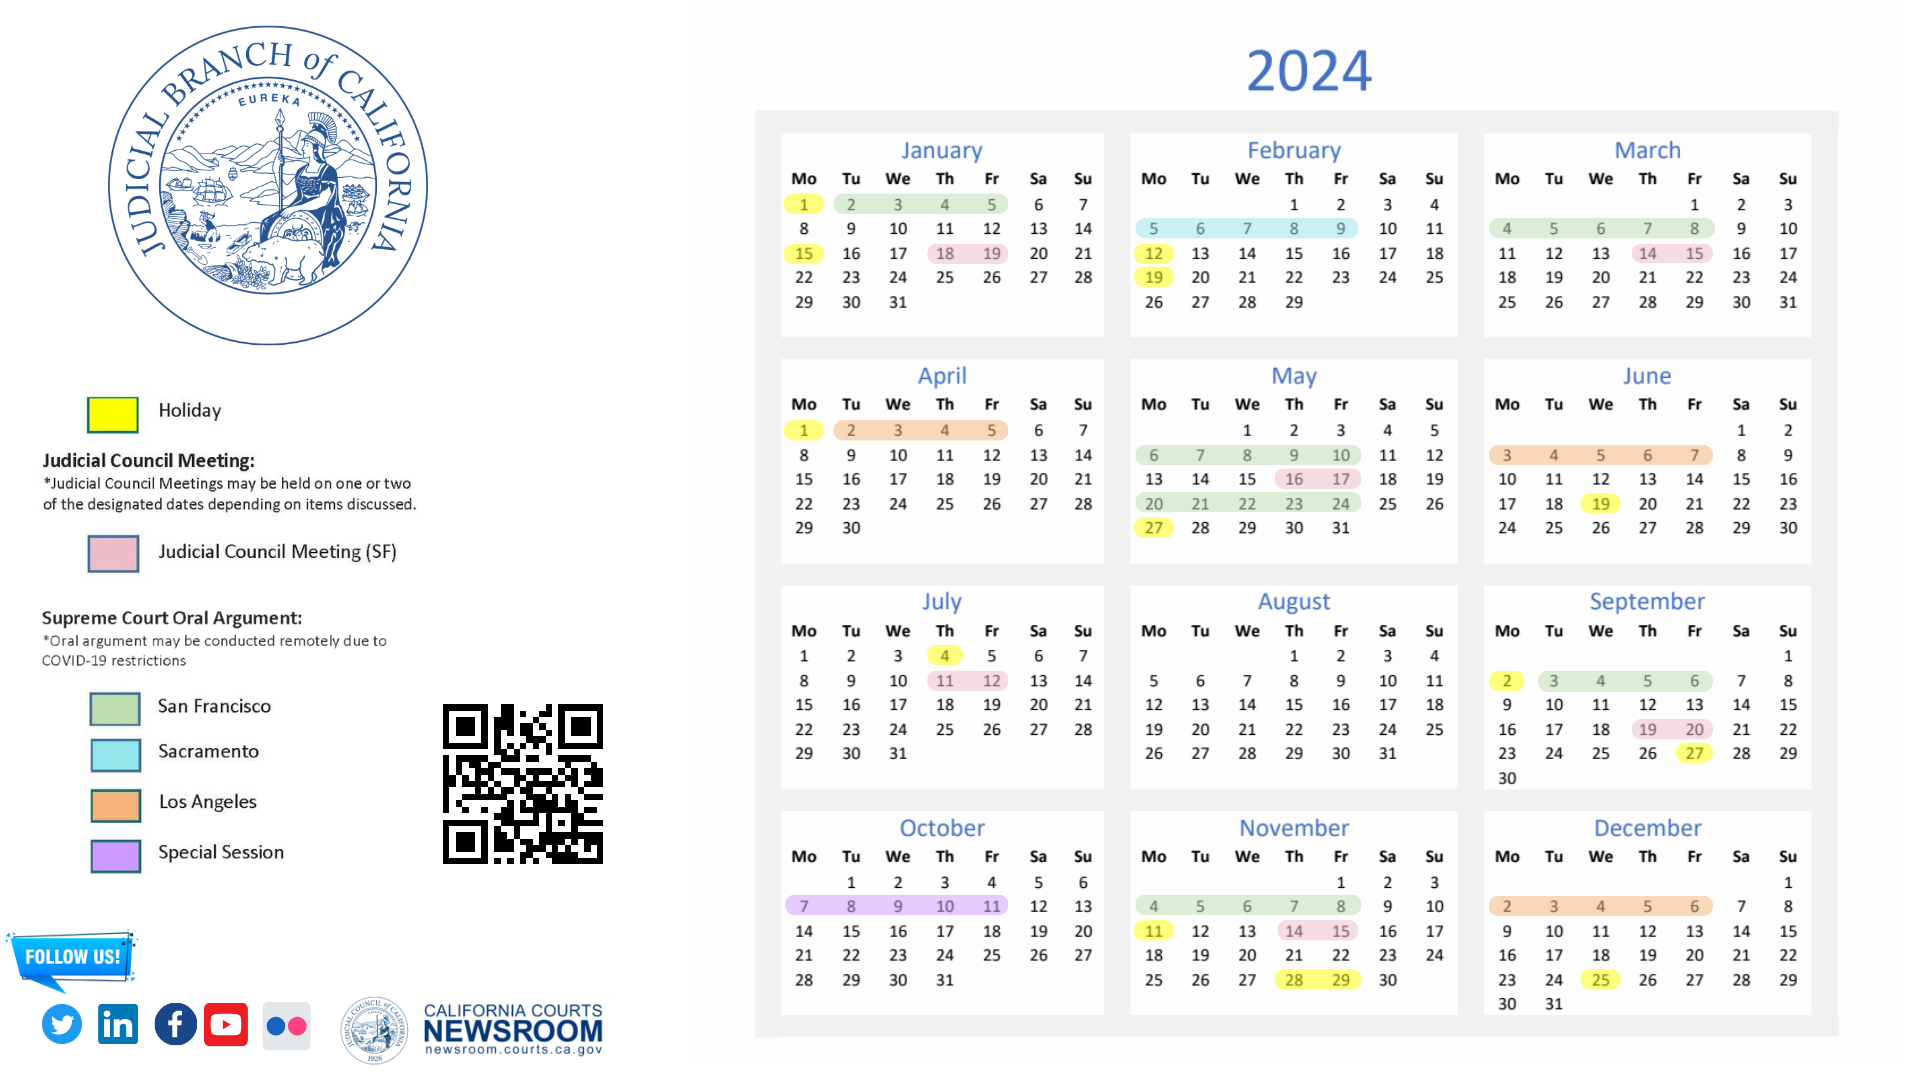 Judicial Council Calendar for 2024